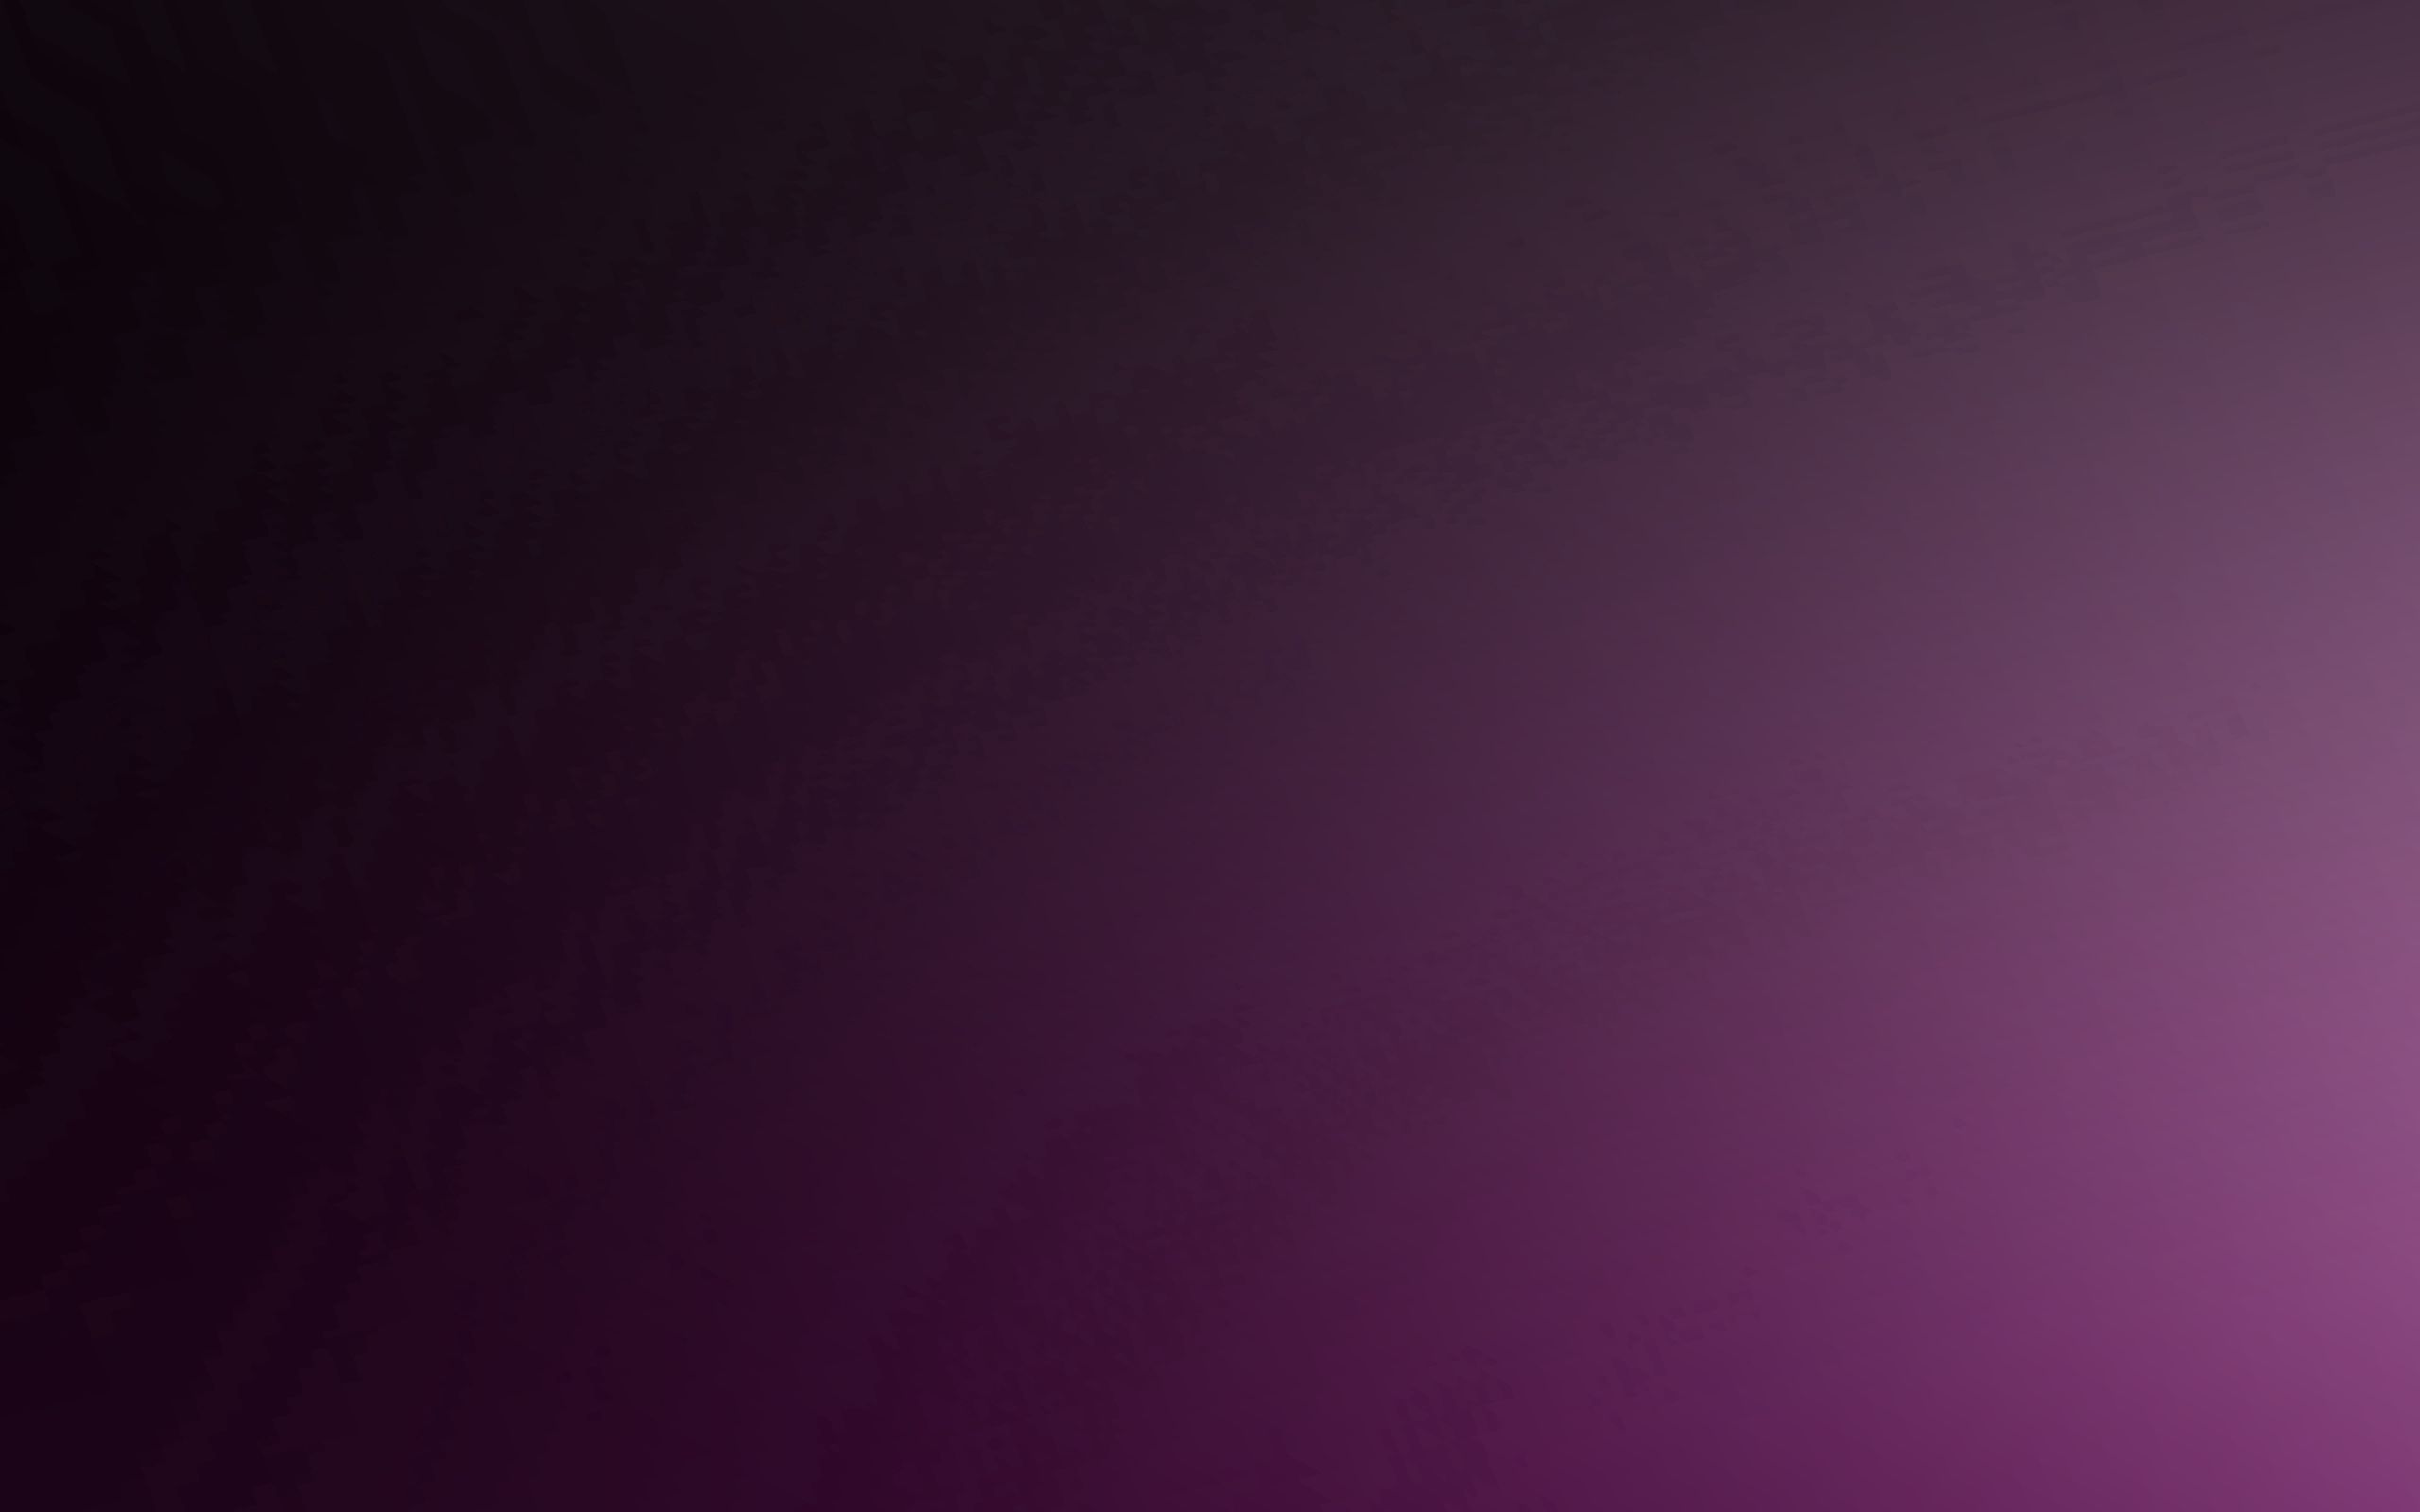 Phone Background dark, shadow, abstract, purple